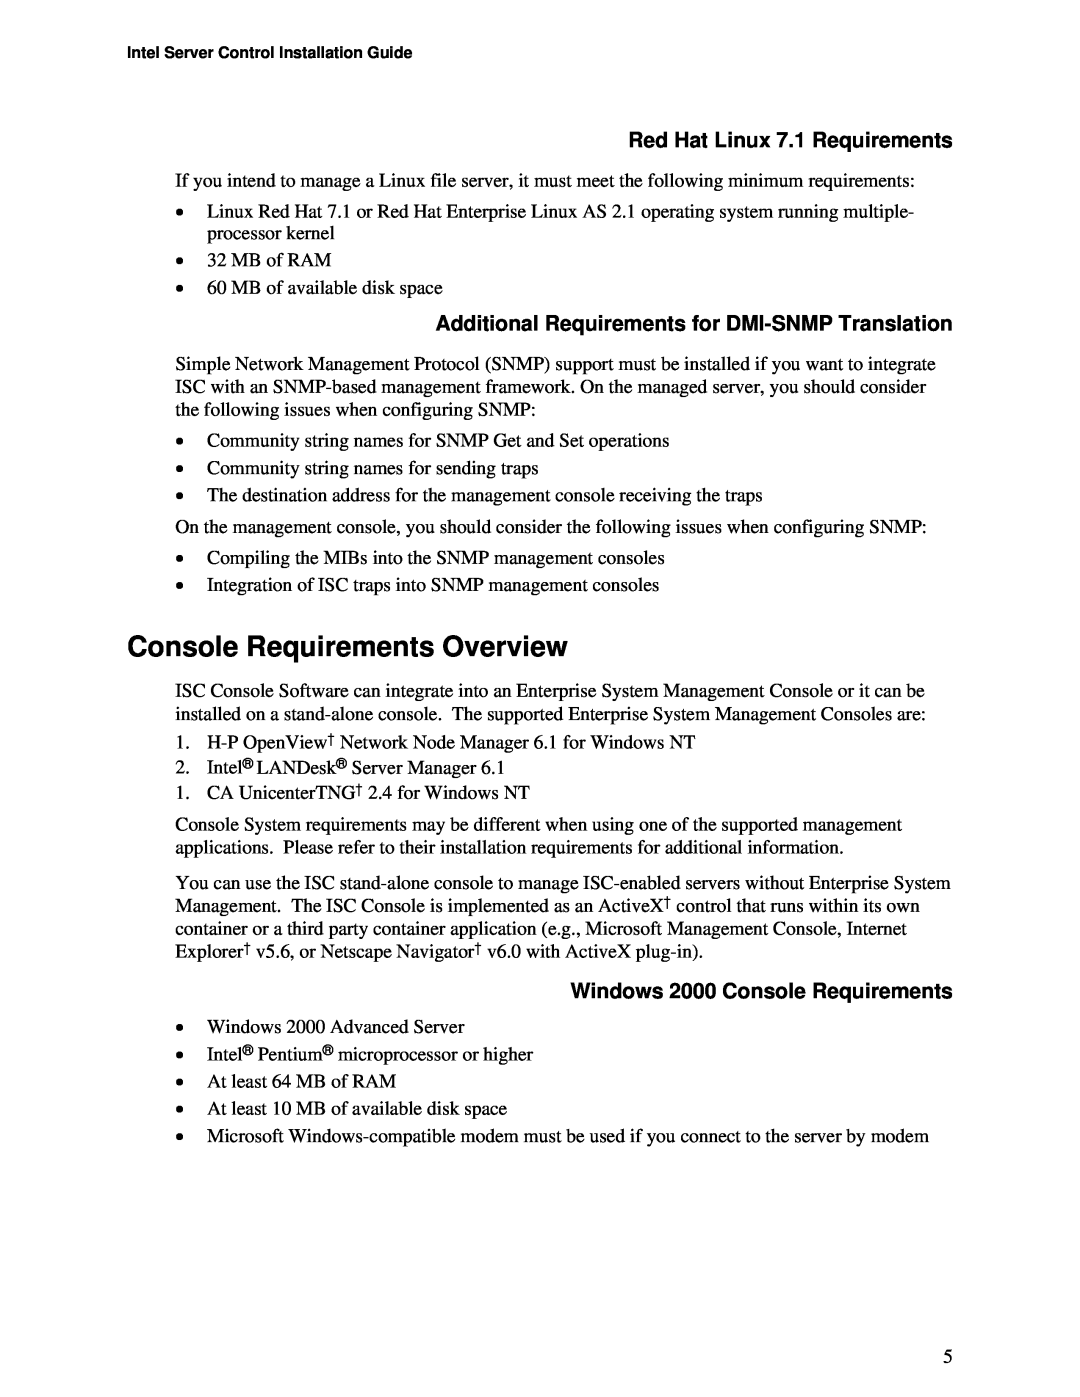 Intel cc2300, cc3300 manual Console Requirements Overview, Red Hat Linux 7.1 Requirements, Windows 2000 Console Requirements 